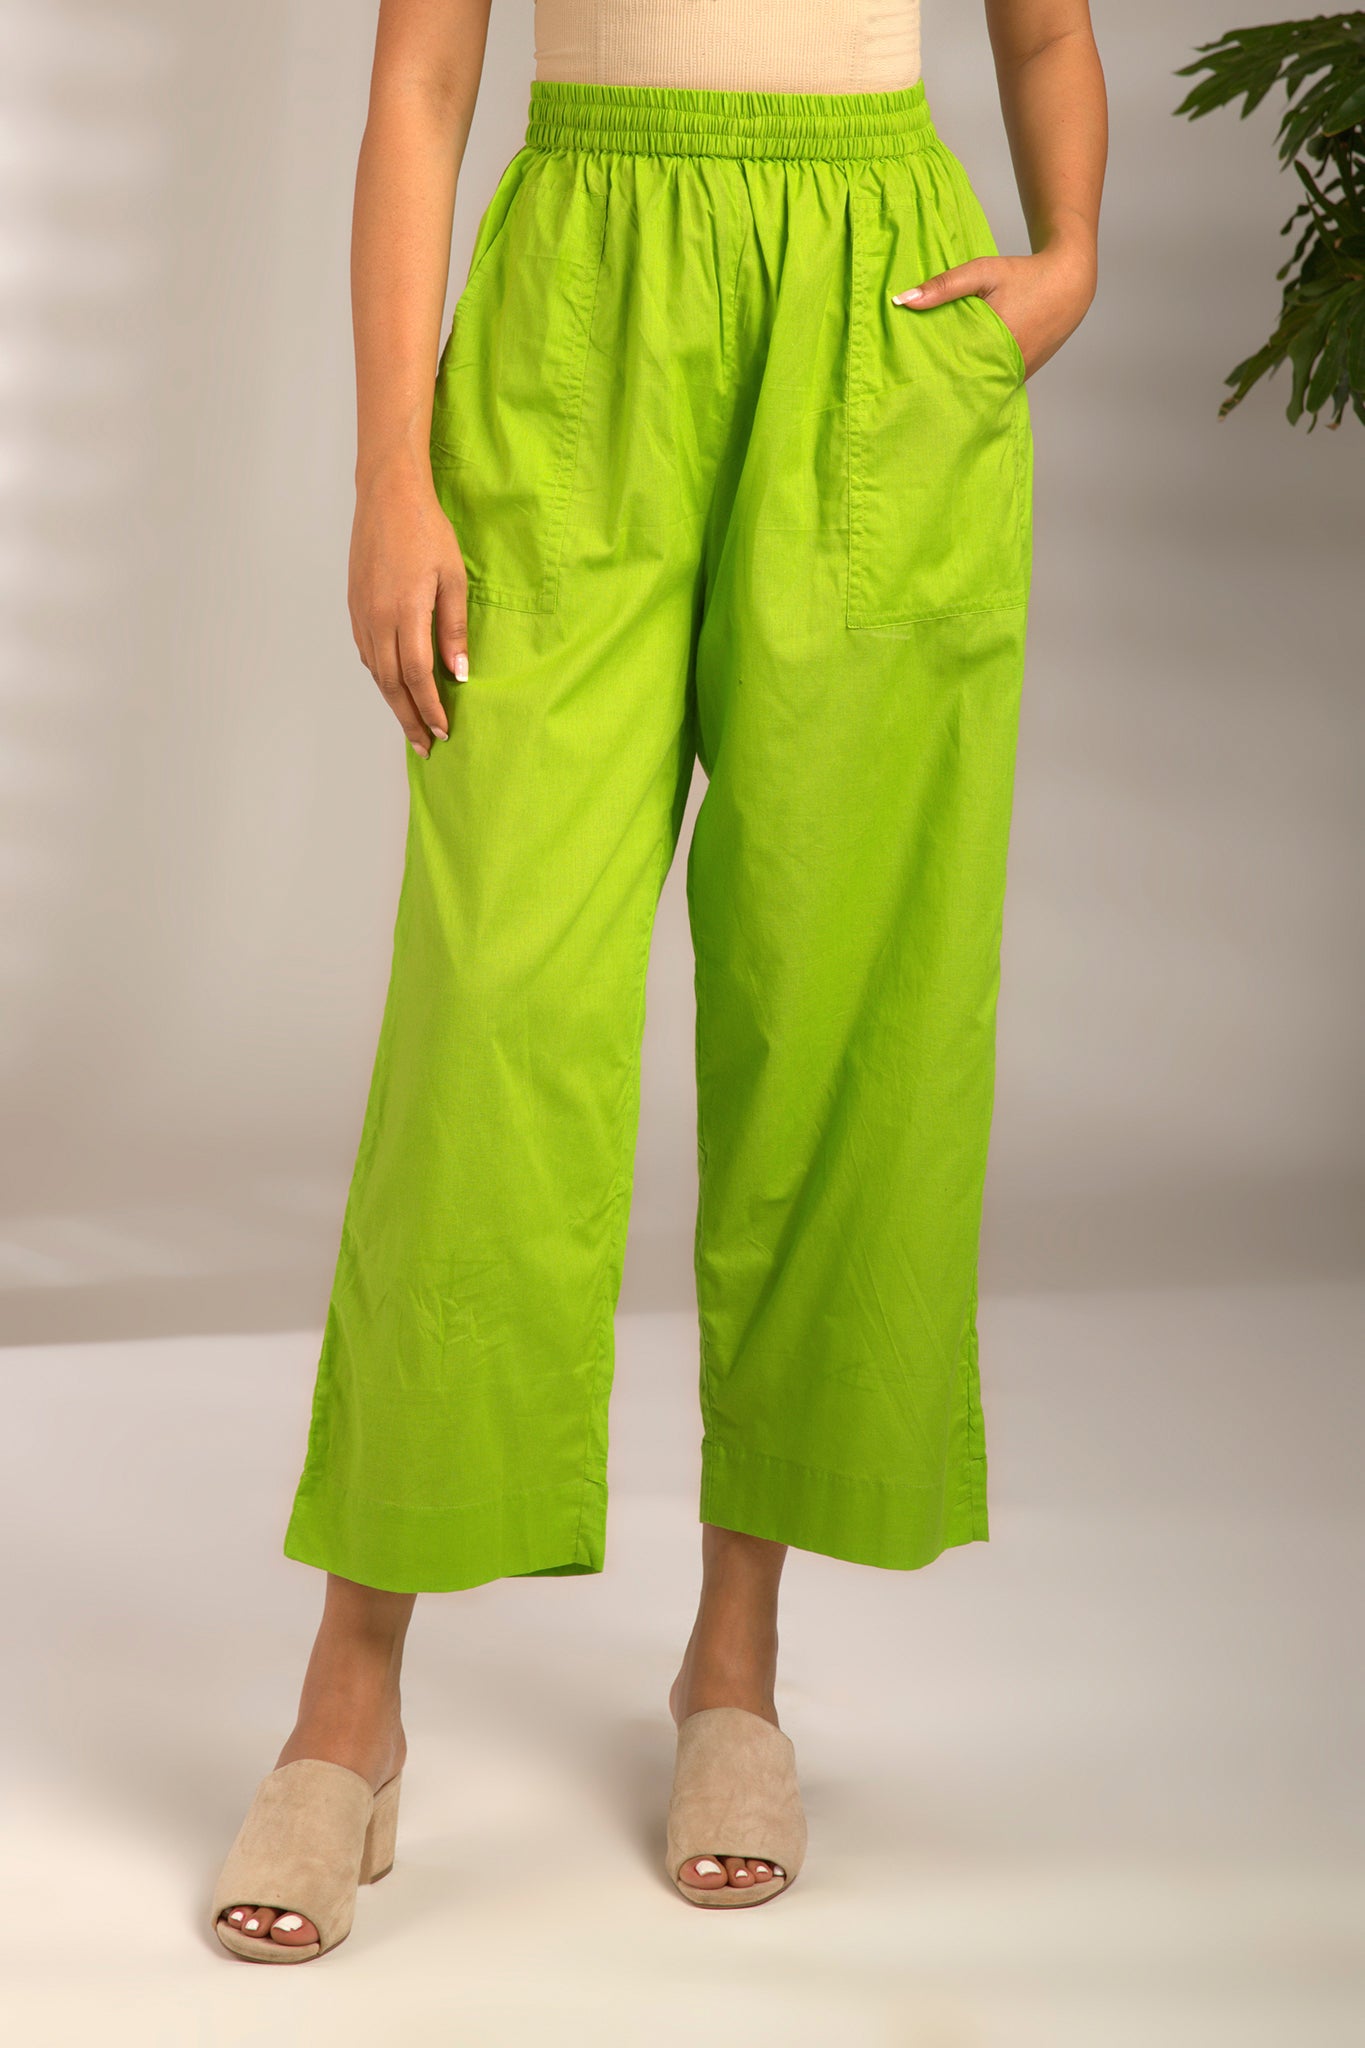 Buy Neon Green Pants Online In India  Etsy India